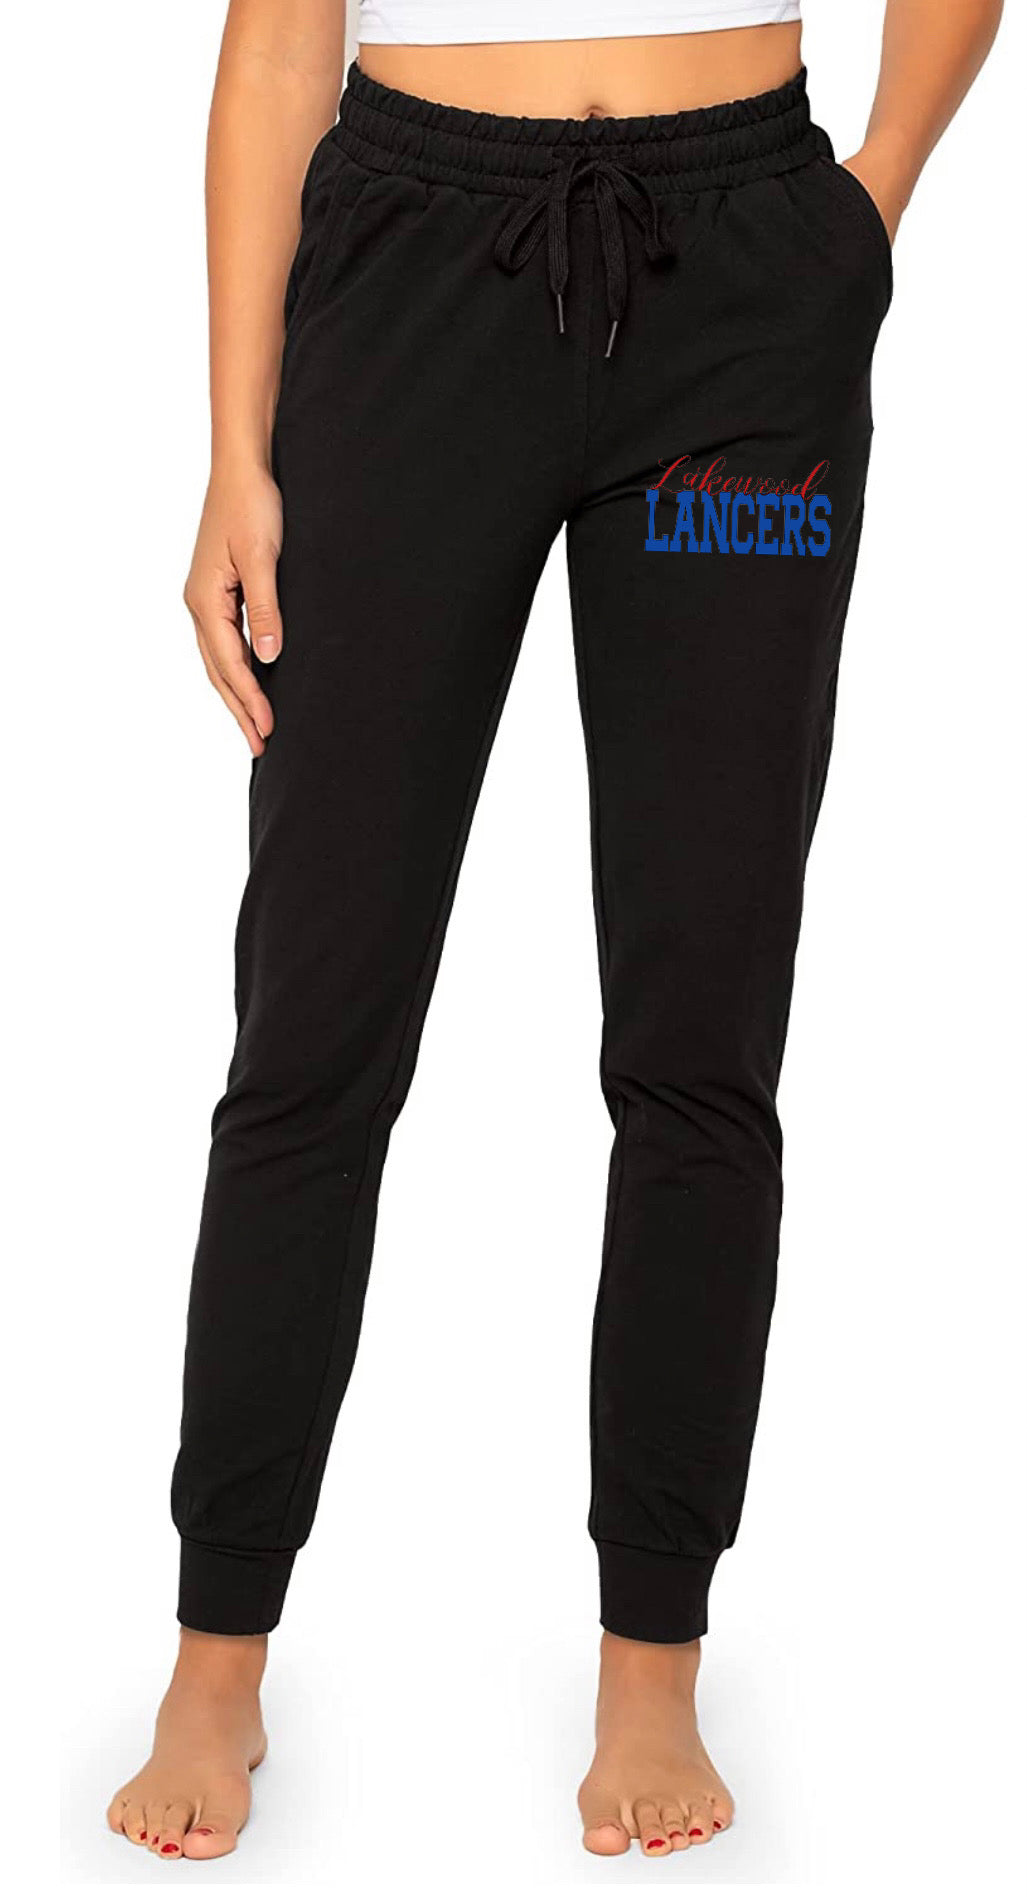 Adult Lakewood Lancers Cursive Lakewood Block Lancers Joggers Sweatpants